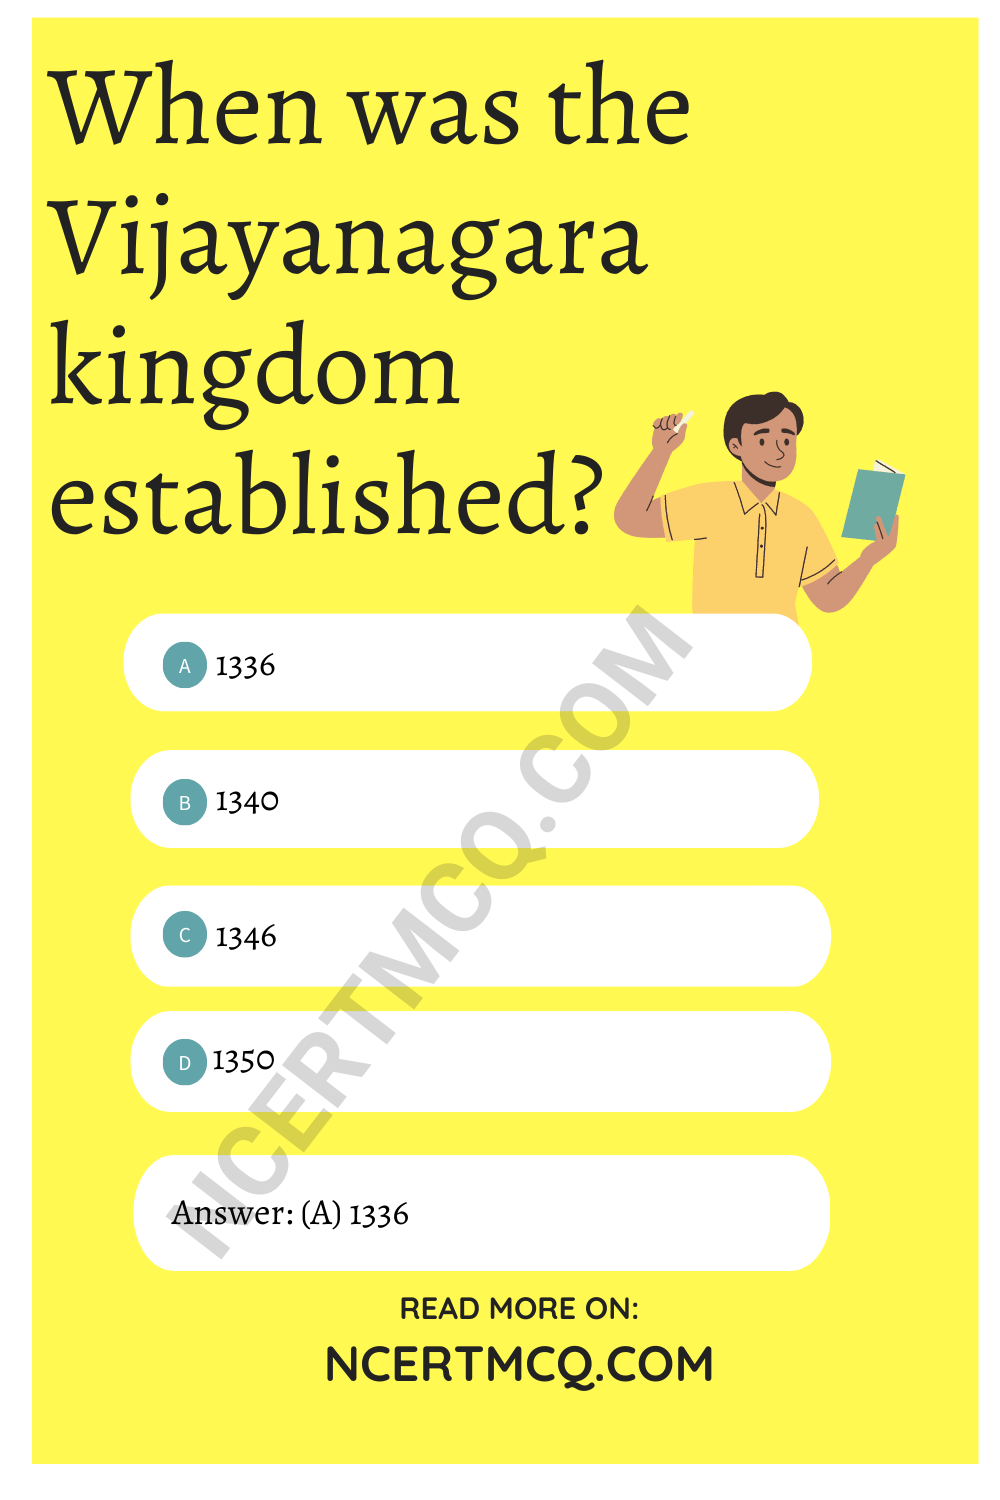 When was the Vijayanagara kingdom established?